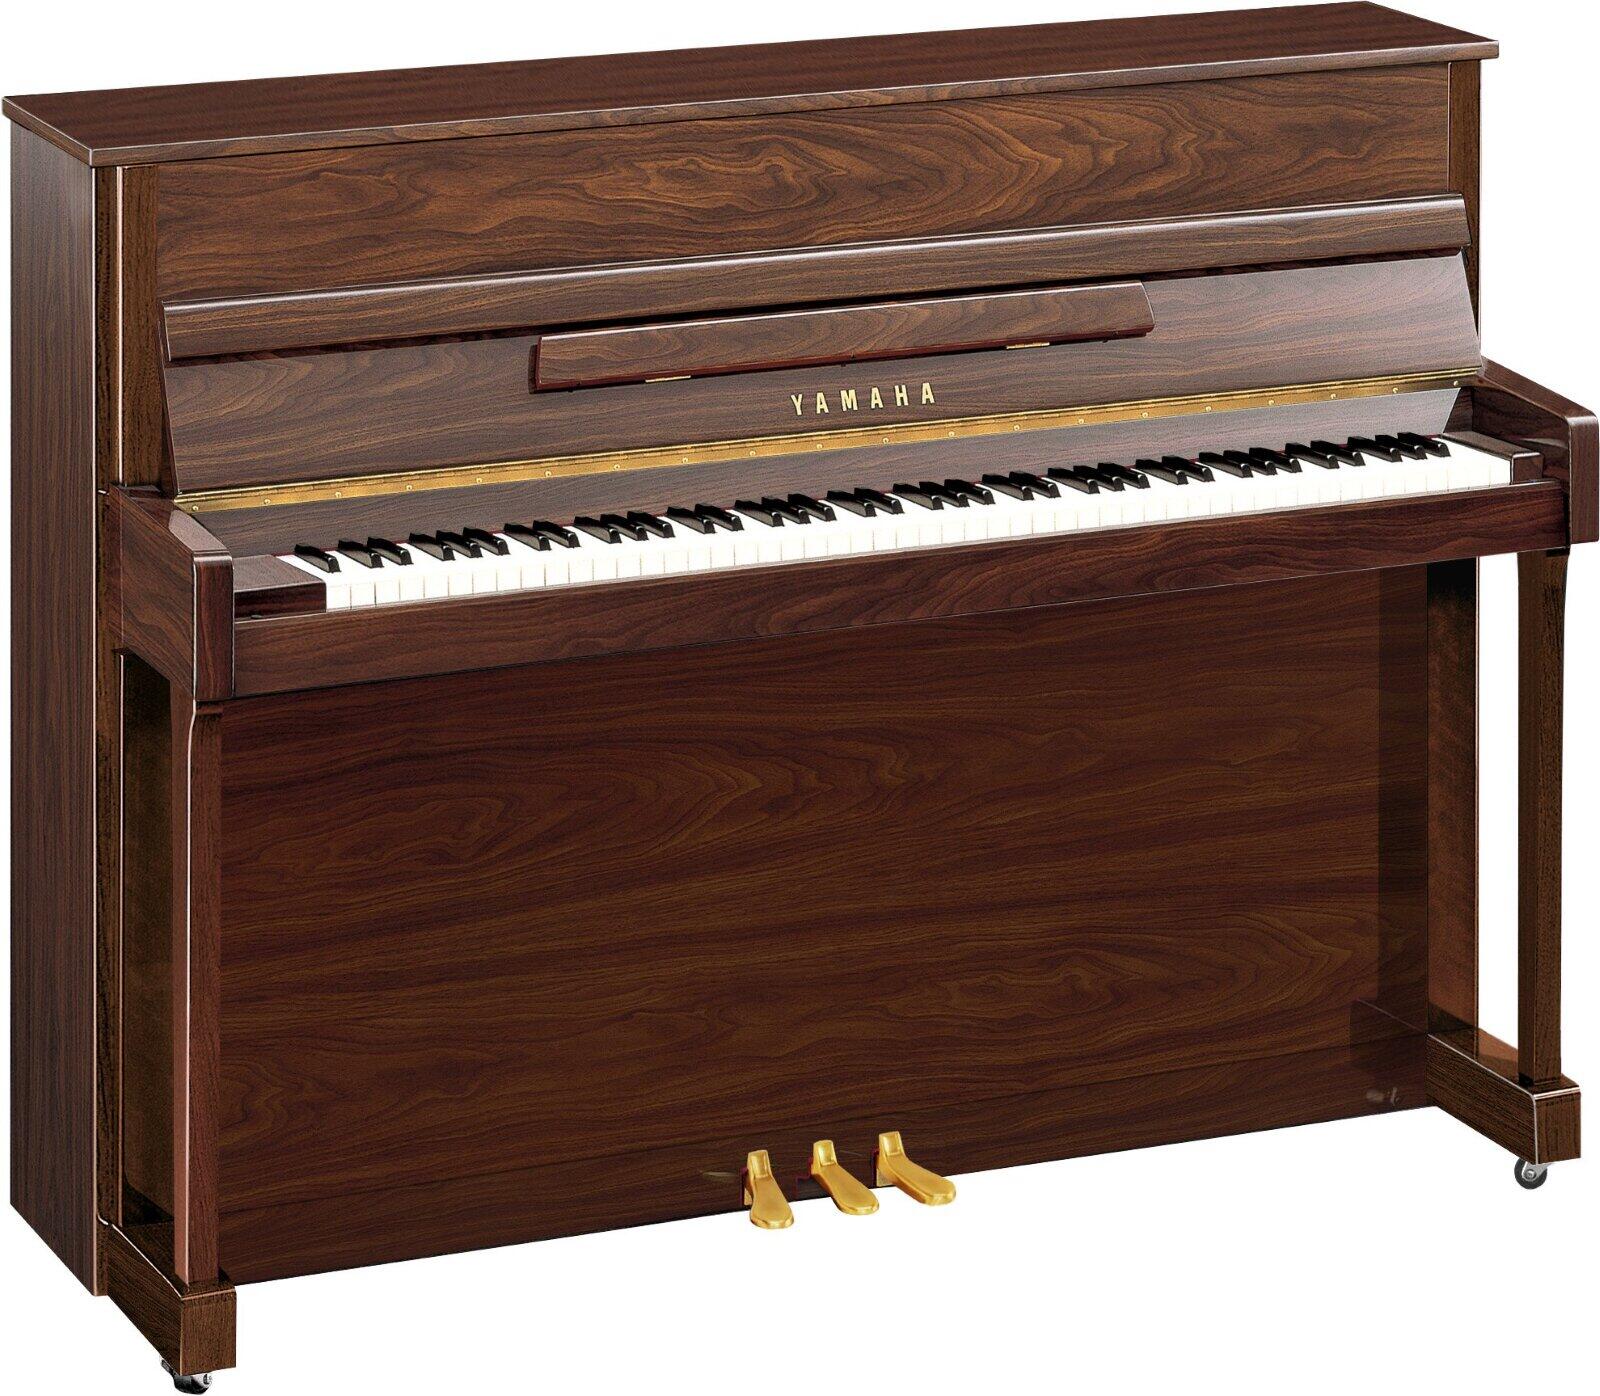 Yamaha Pianos Silent B2 SC3 PW Silent Glossy Walnut 113 cm : photo 1